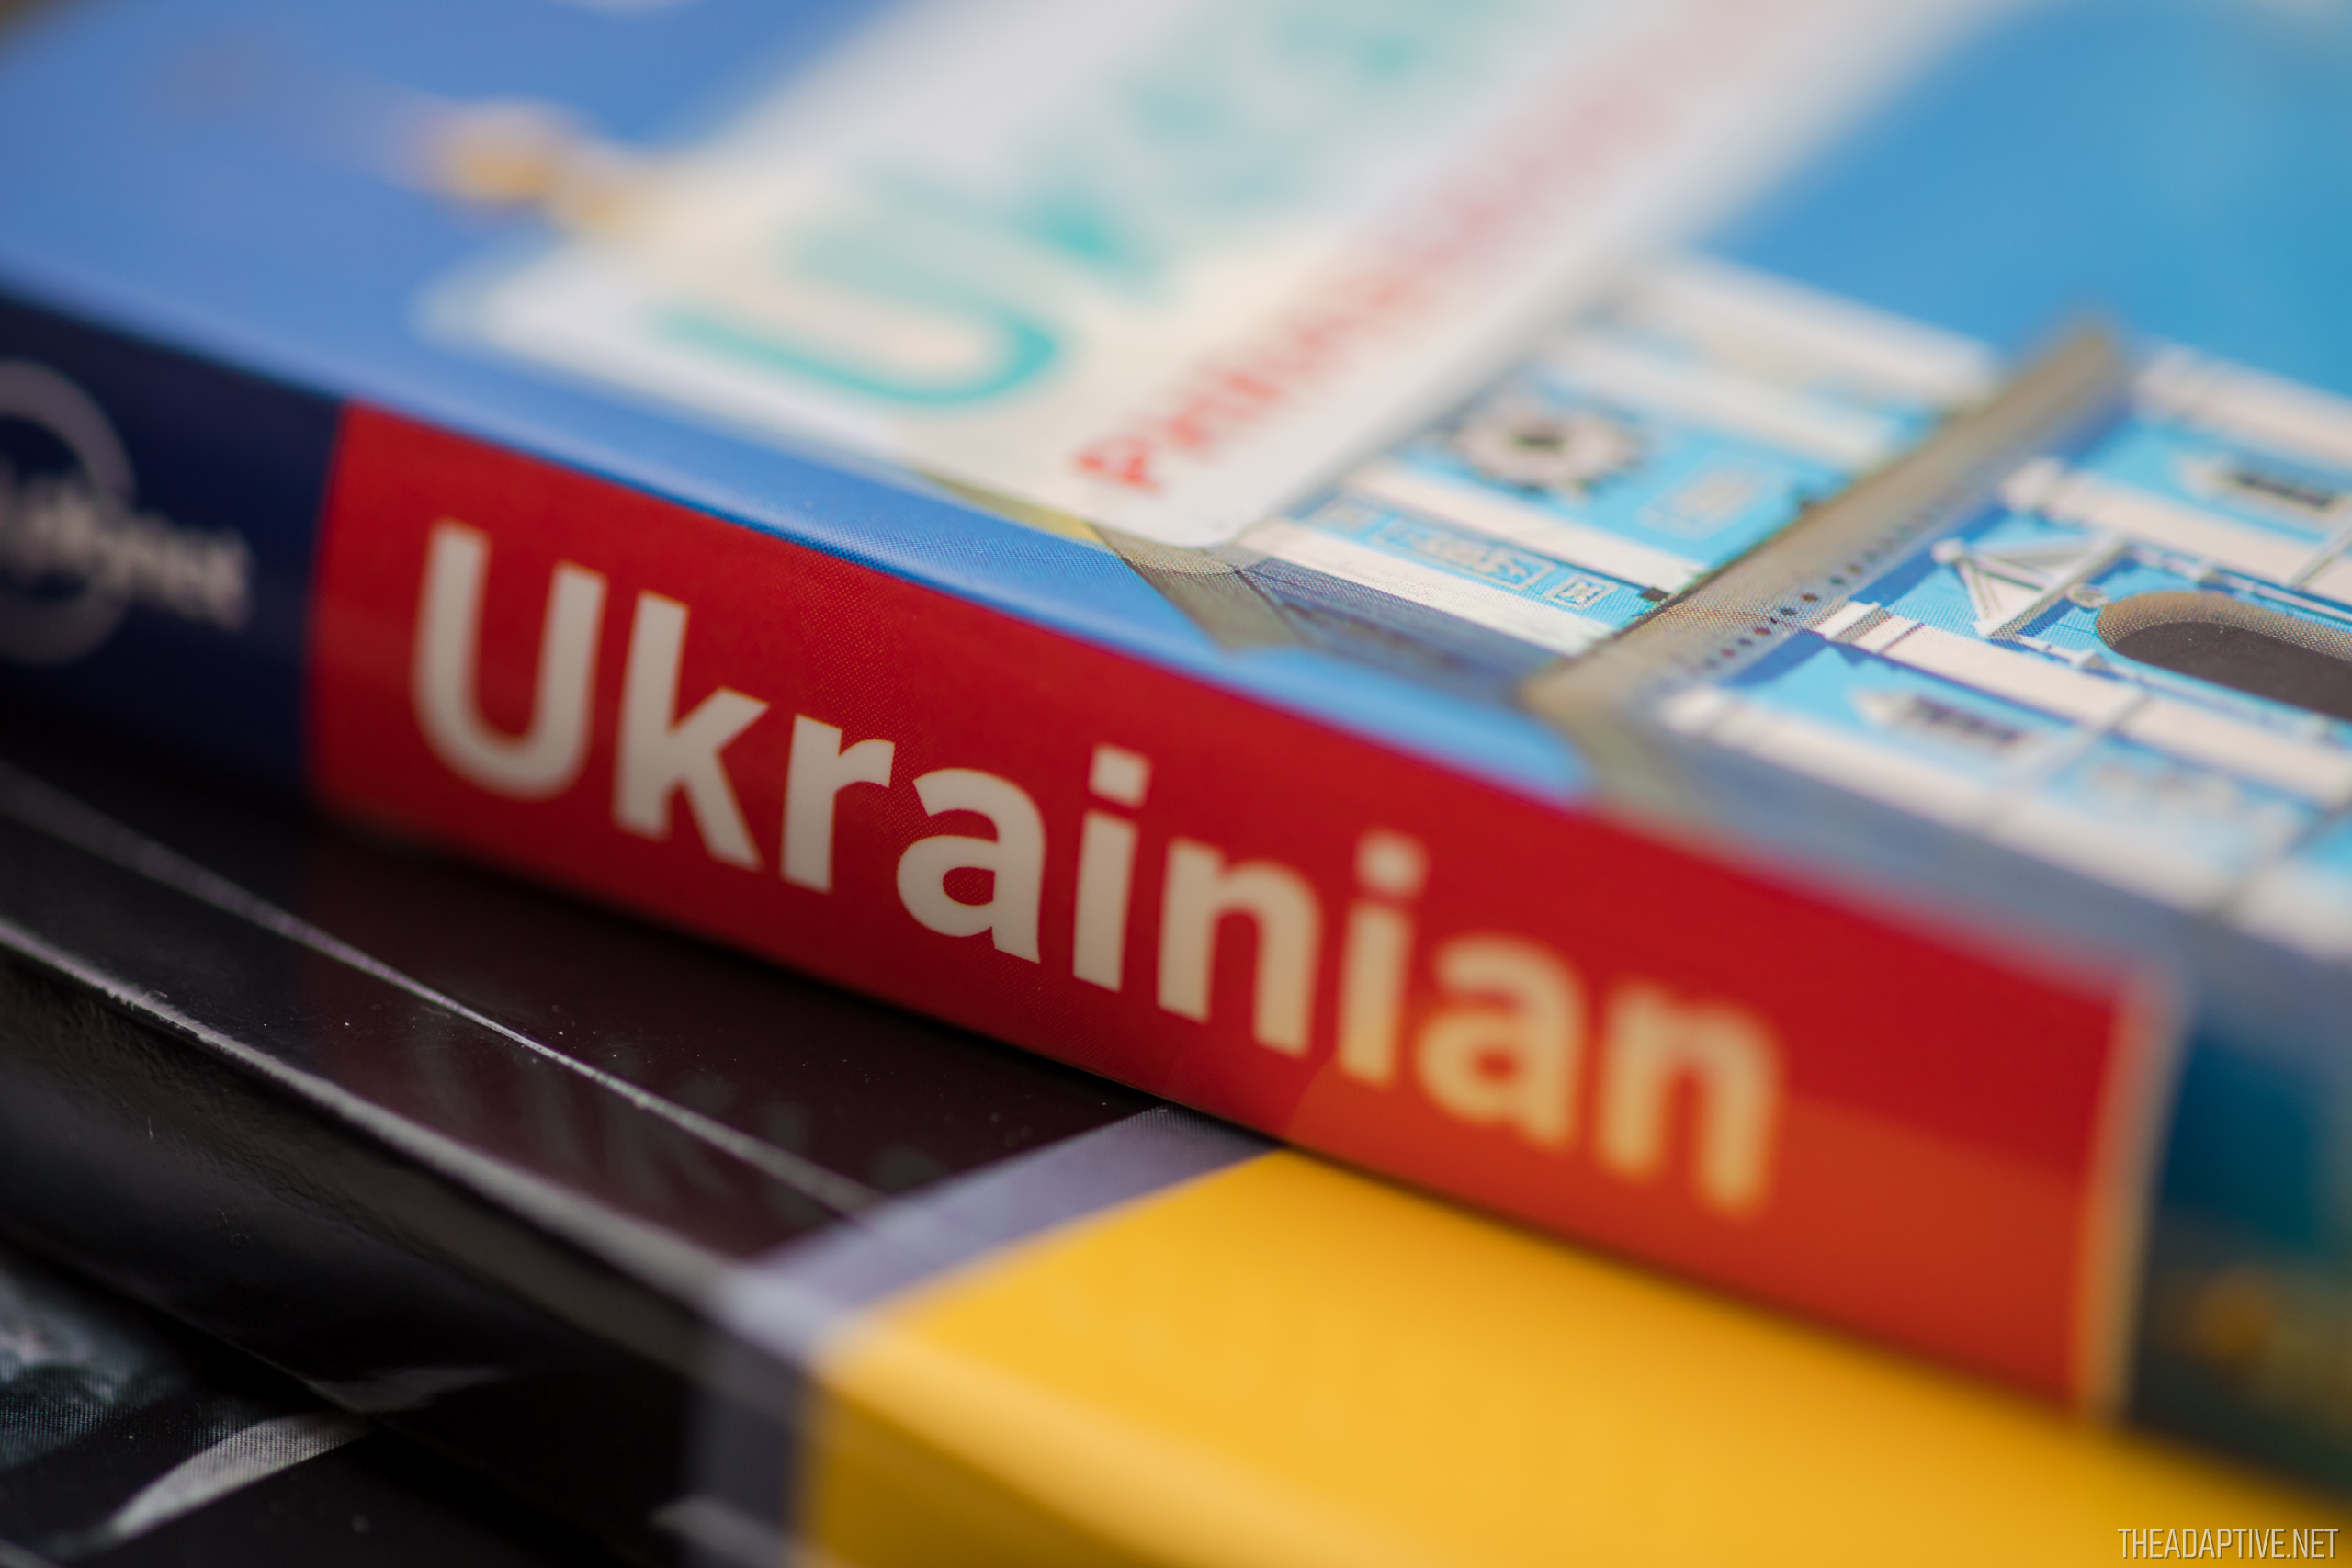 Ukrainian book